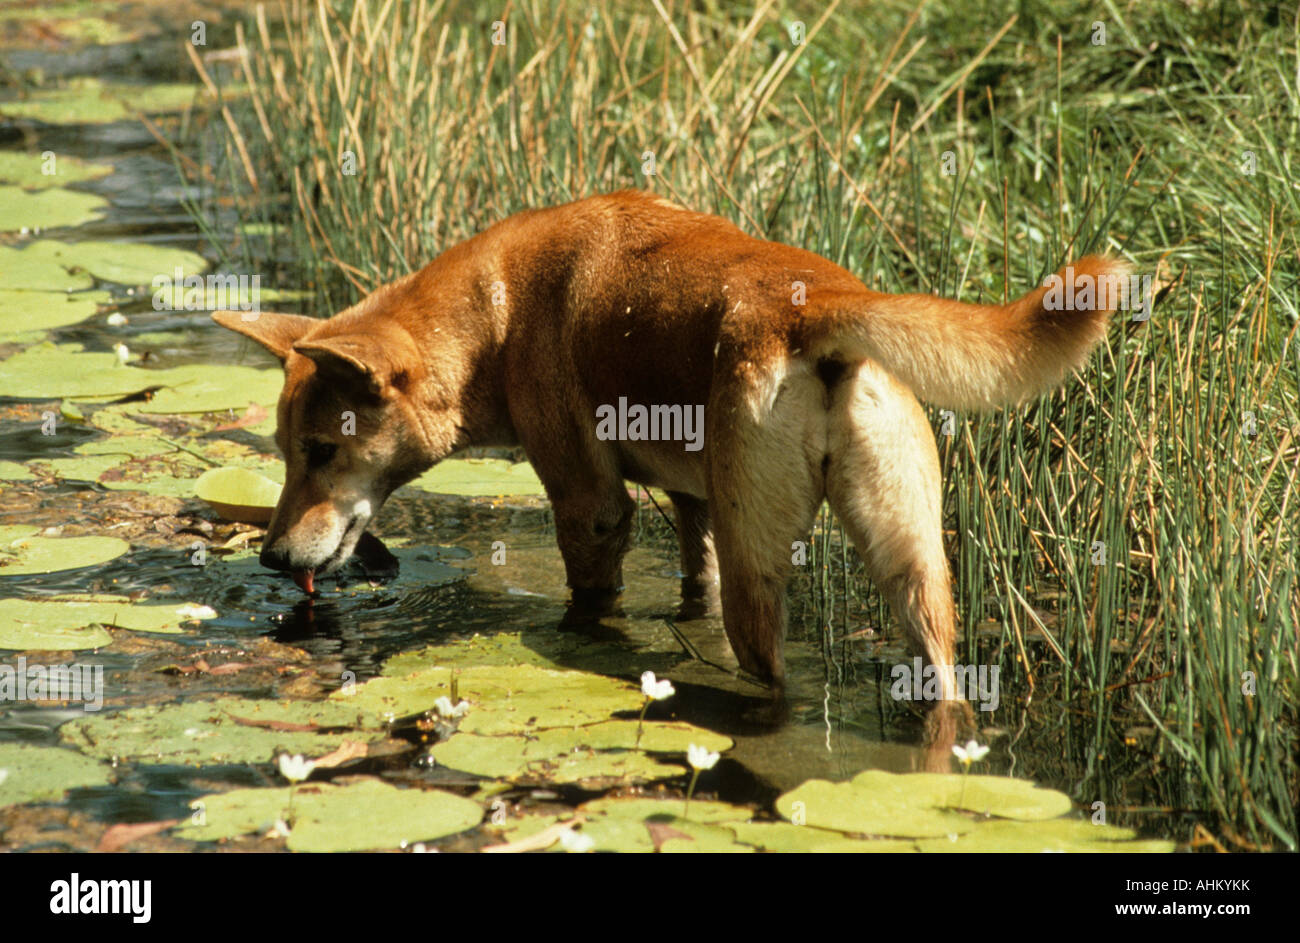 Sygeplejeskole oase tørre Dingo australischer Wildhund trinkt Wasser Canis familiaris dingo dingo  drinks water Stock Photo - Alamy